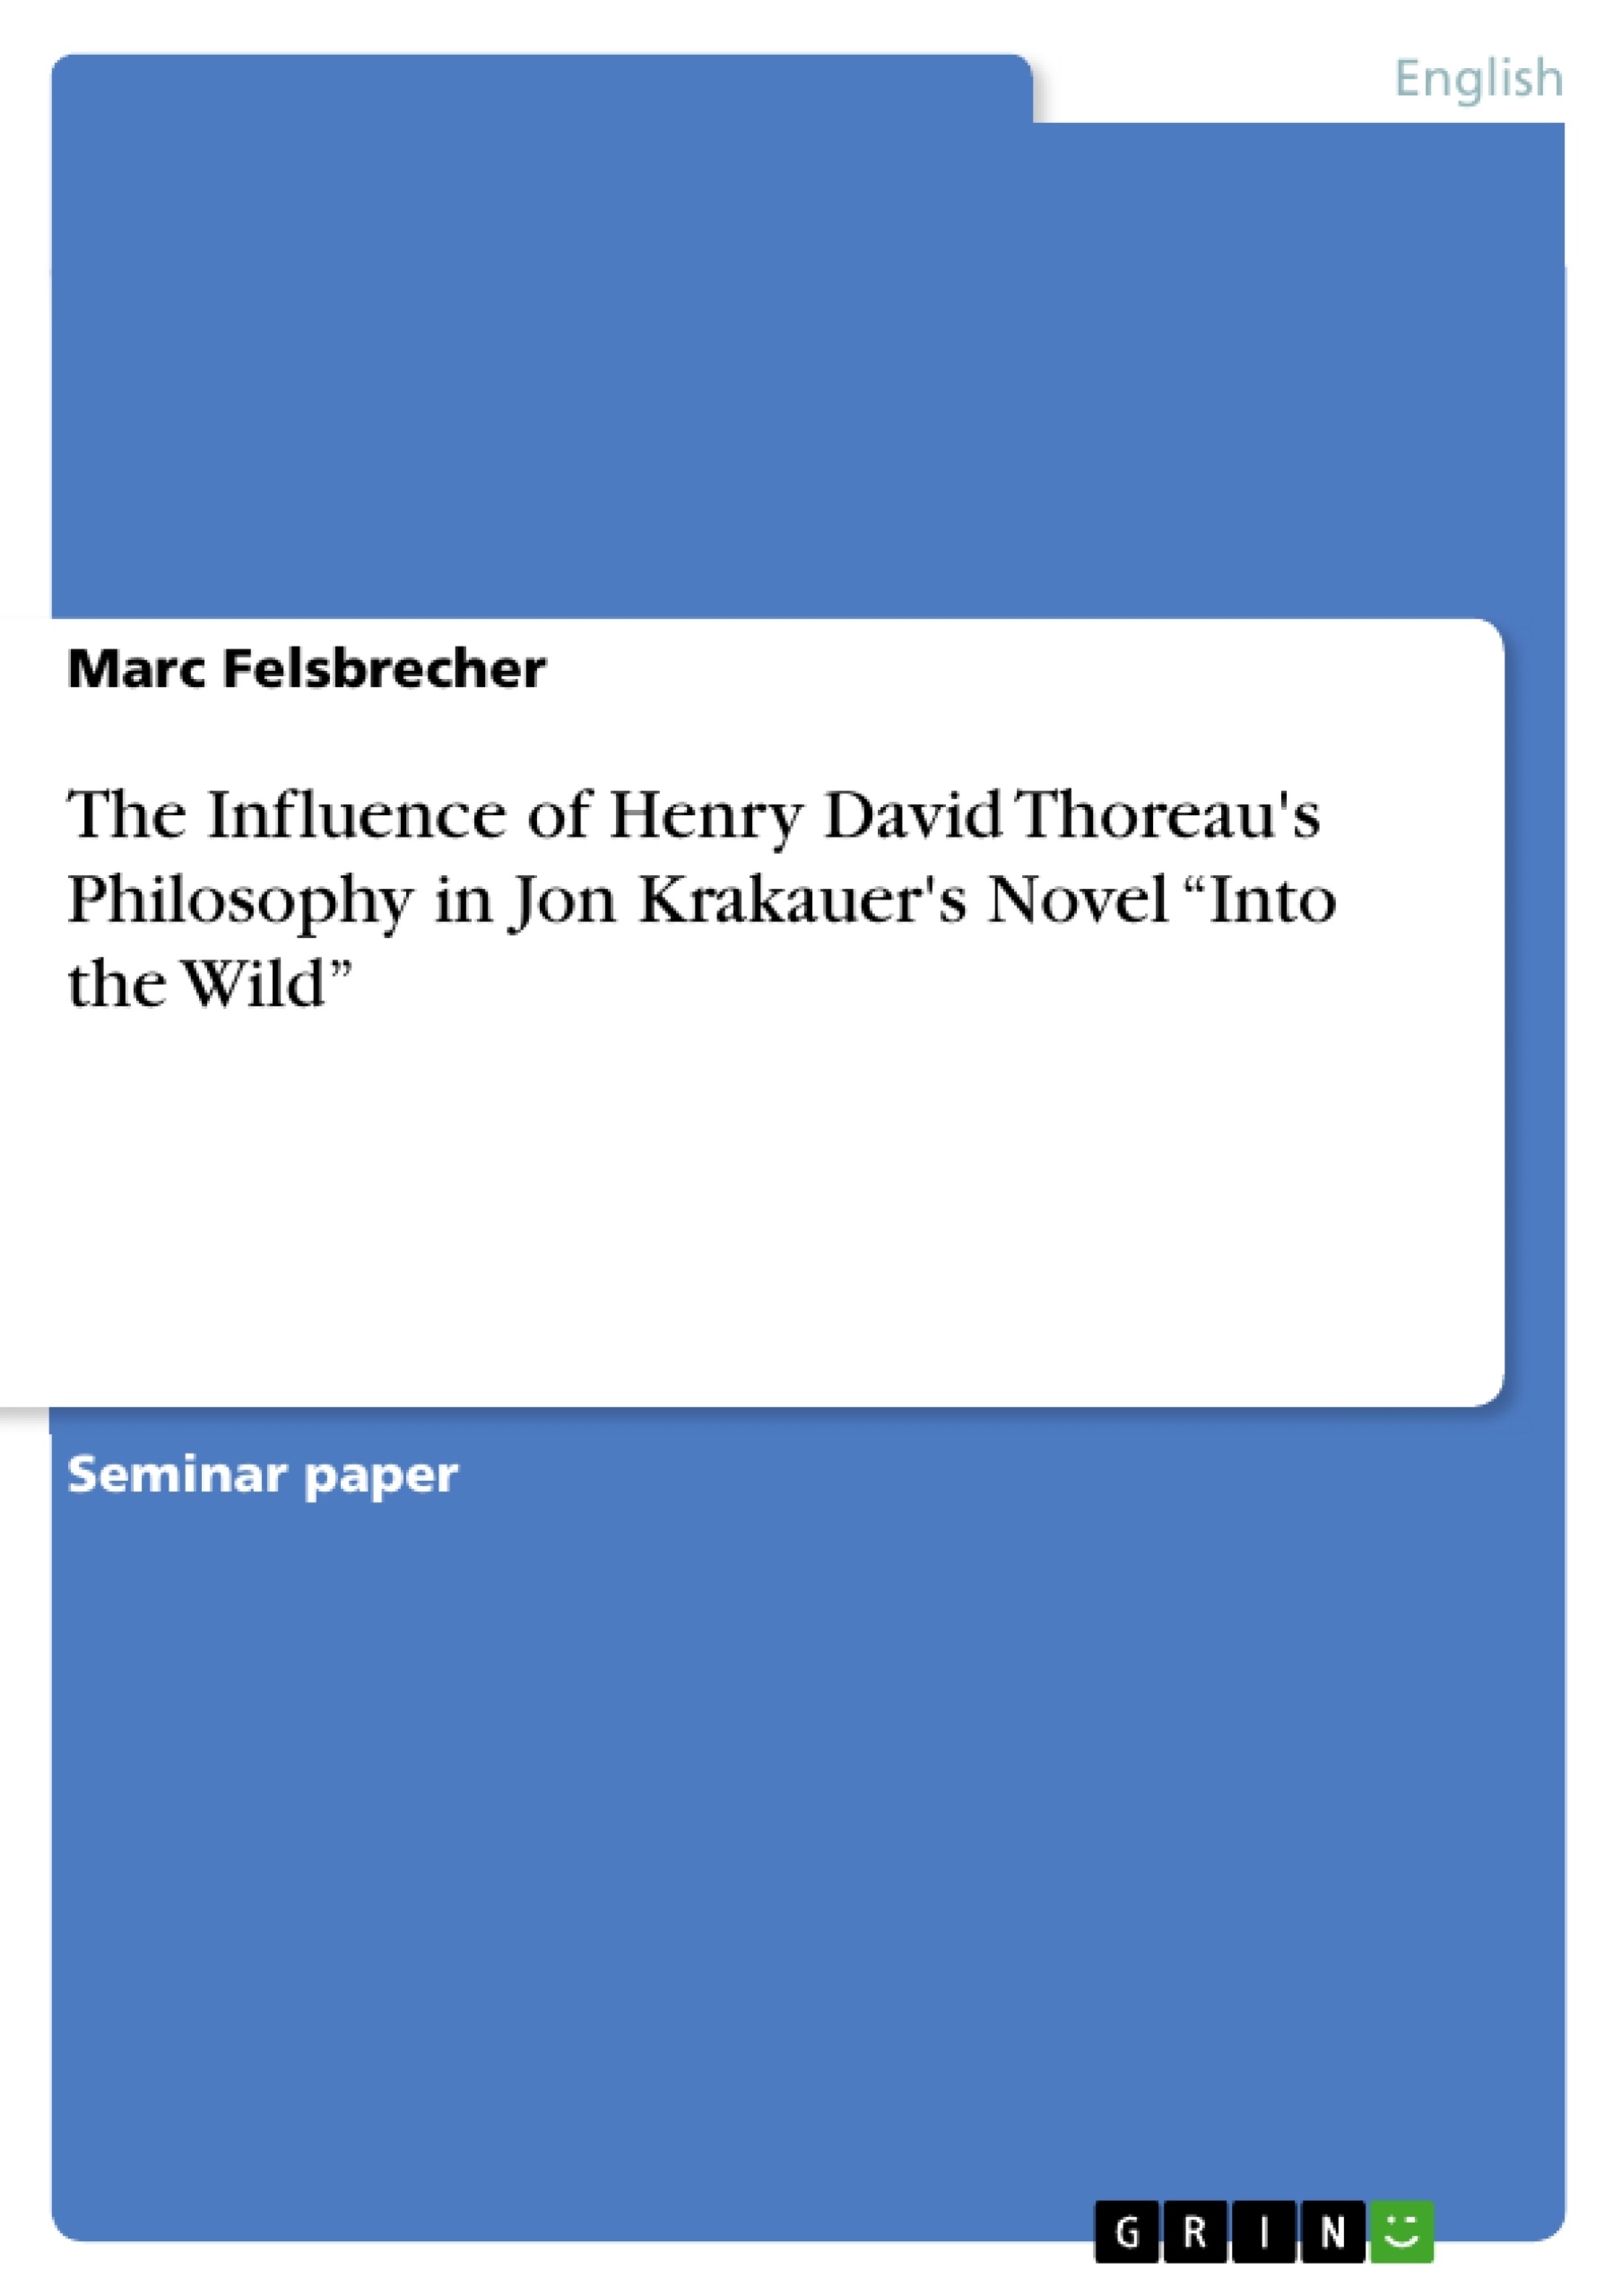 Title: The Influence of Henry David Thoreau's Philosophy in Jon Krakauer's Novel “Into the Wild”